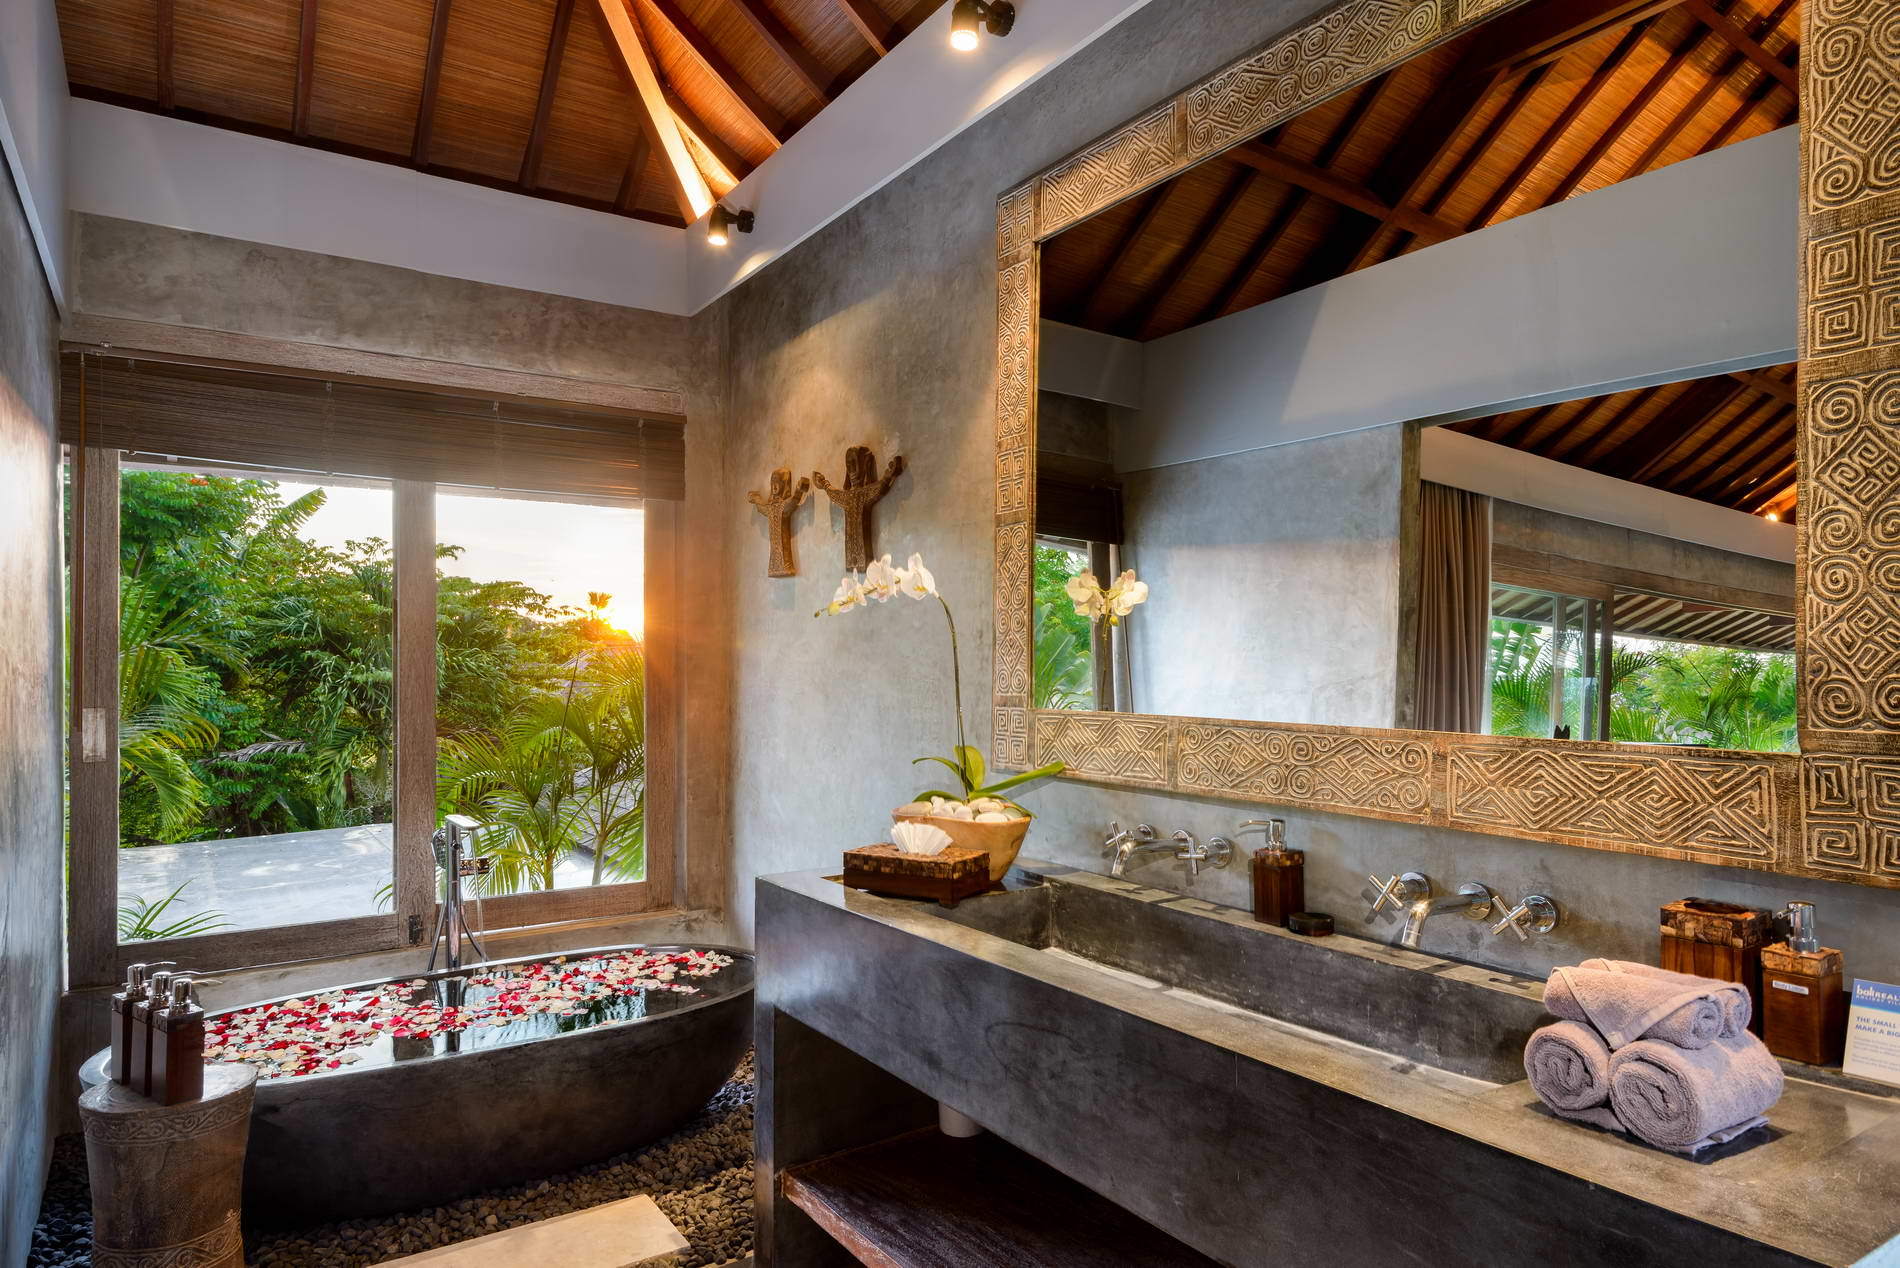 Ванная комната Балли в стиле Бали. Бали виллы интерьер Bali. Дизайн Балли в стиле Бали. Индонезия Бали интерьер.